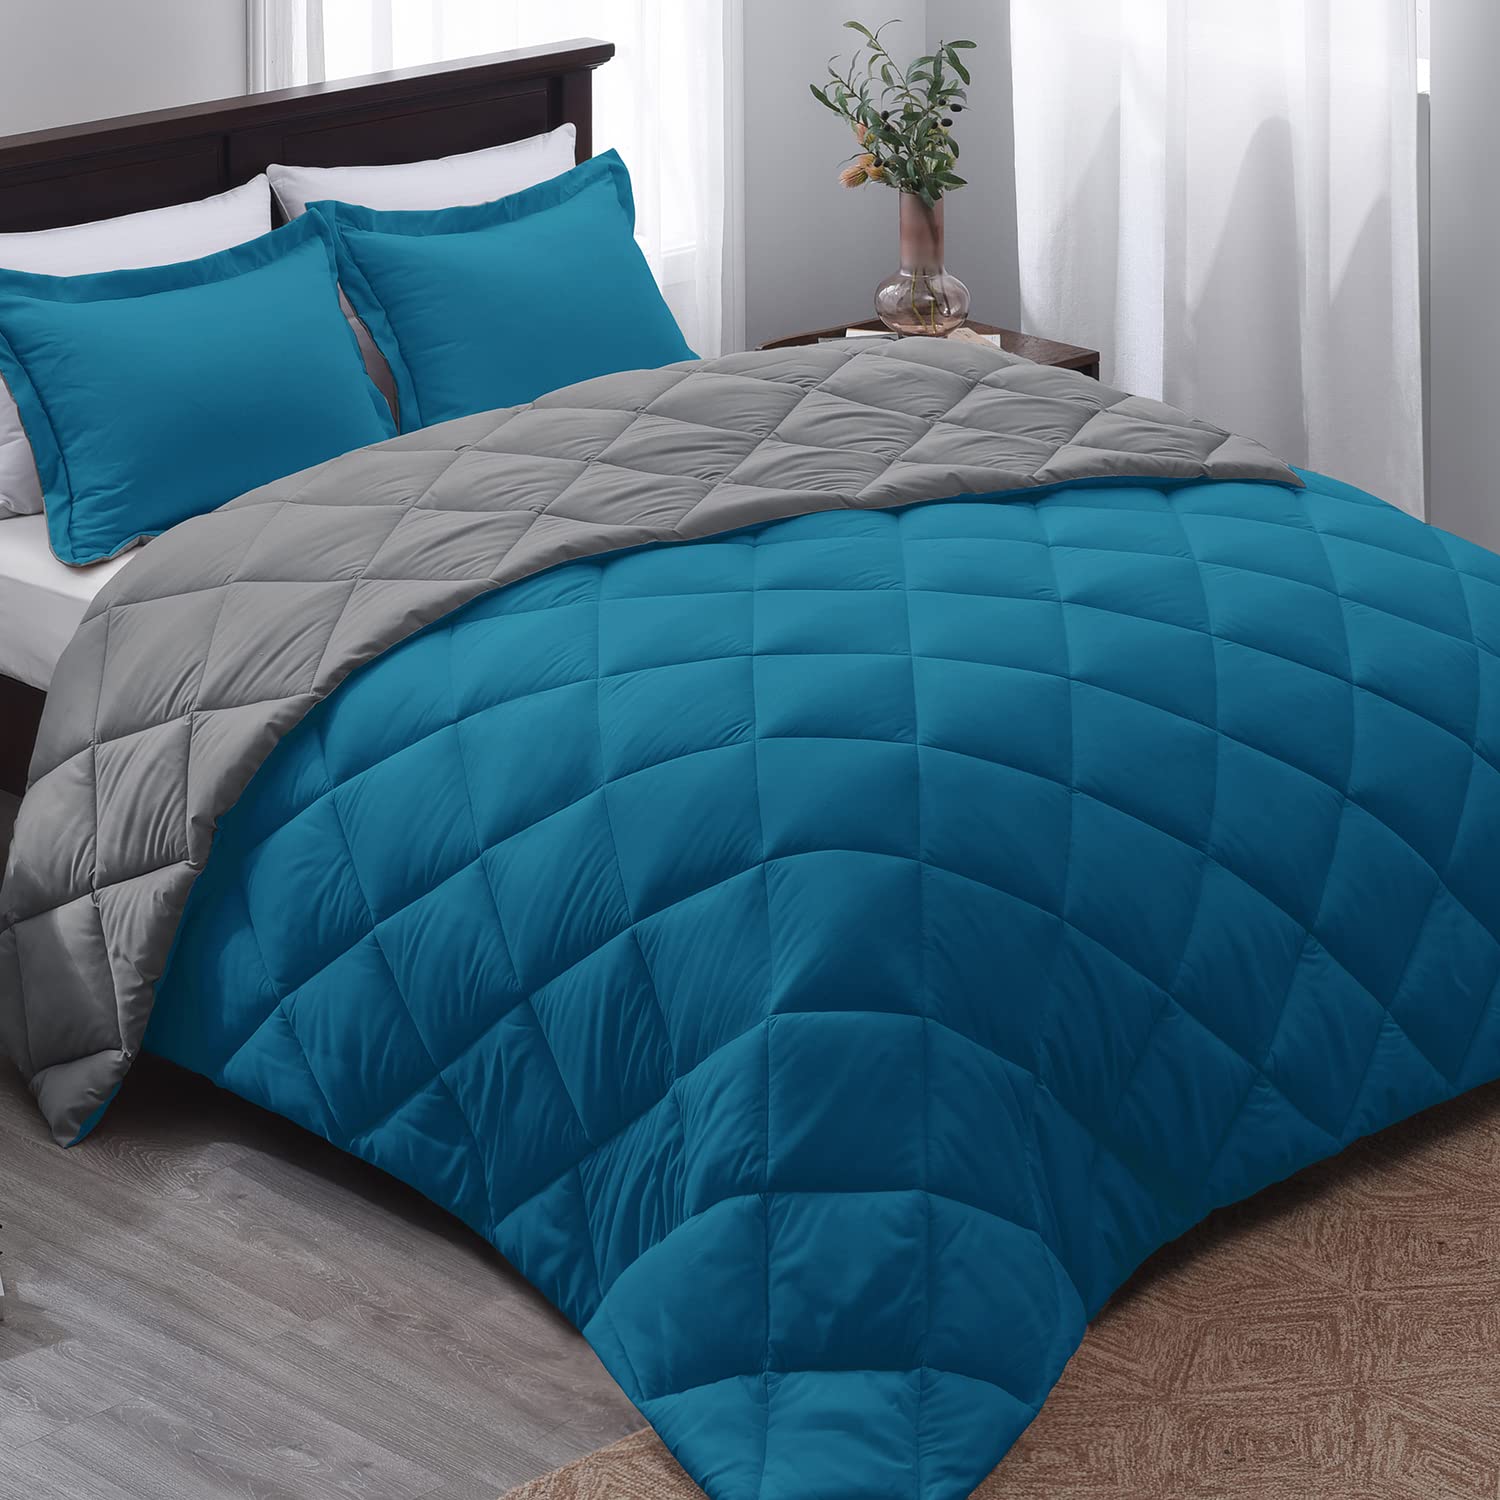 Book Cover Basic Beyond Twin Comforter Set - Blue Comforter Set Twin, Reversible Twin Bed Comforter Set for All Seasons, Algiers Blue/Charcoal Gray, 1 Comforter (66